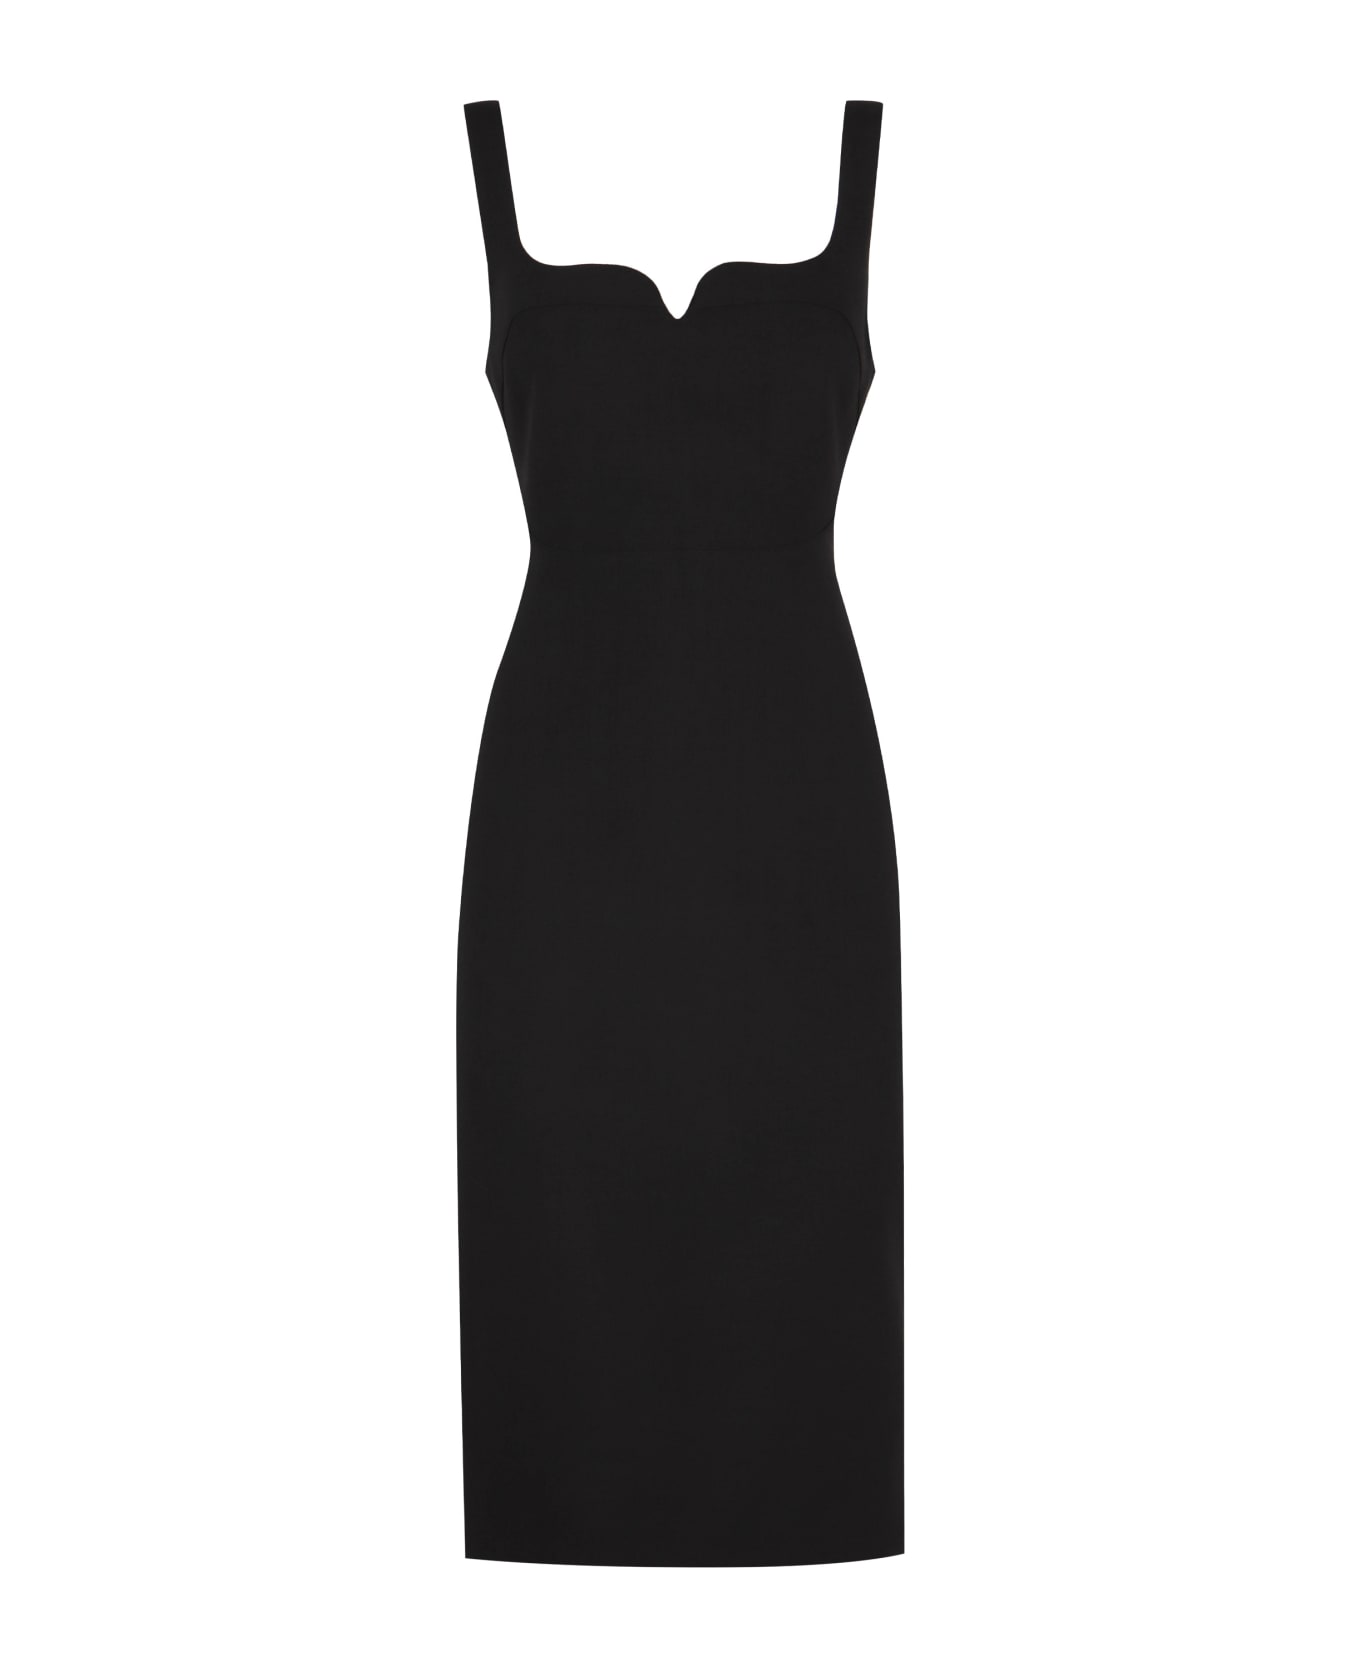 Victoria Beckham Sheath Dress - black